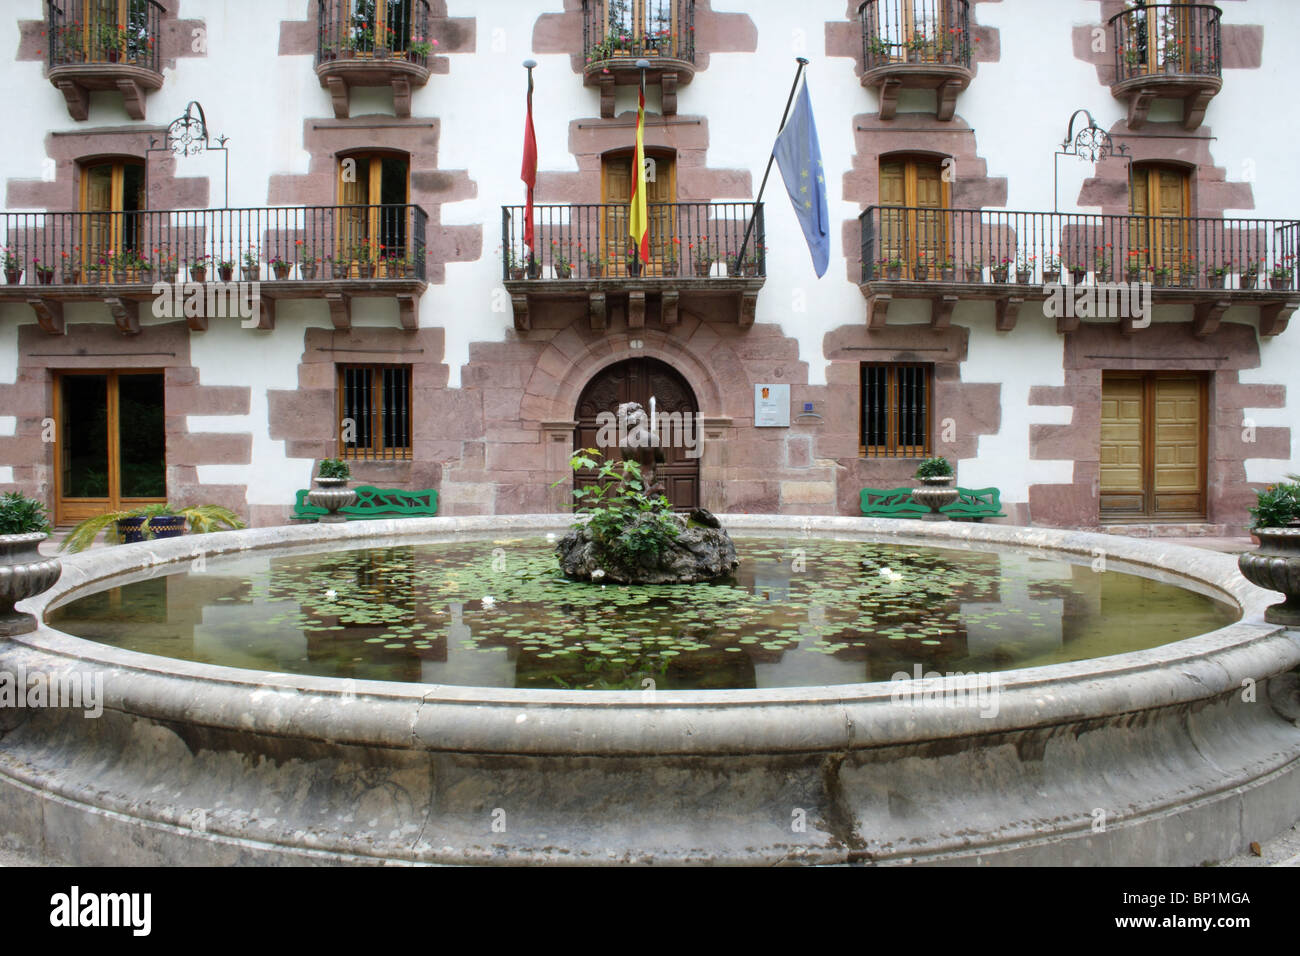 Fountain in lily pond, Botanic Garden, Parc Natural de Bertiz, Oieregi, north of Pamplona, Navarra, Spain Stock Photo